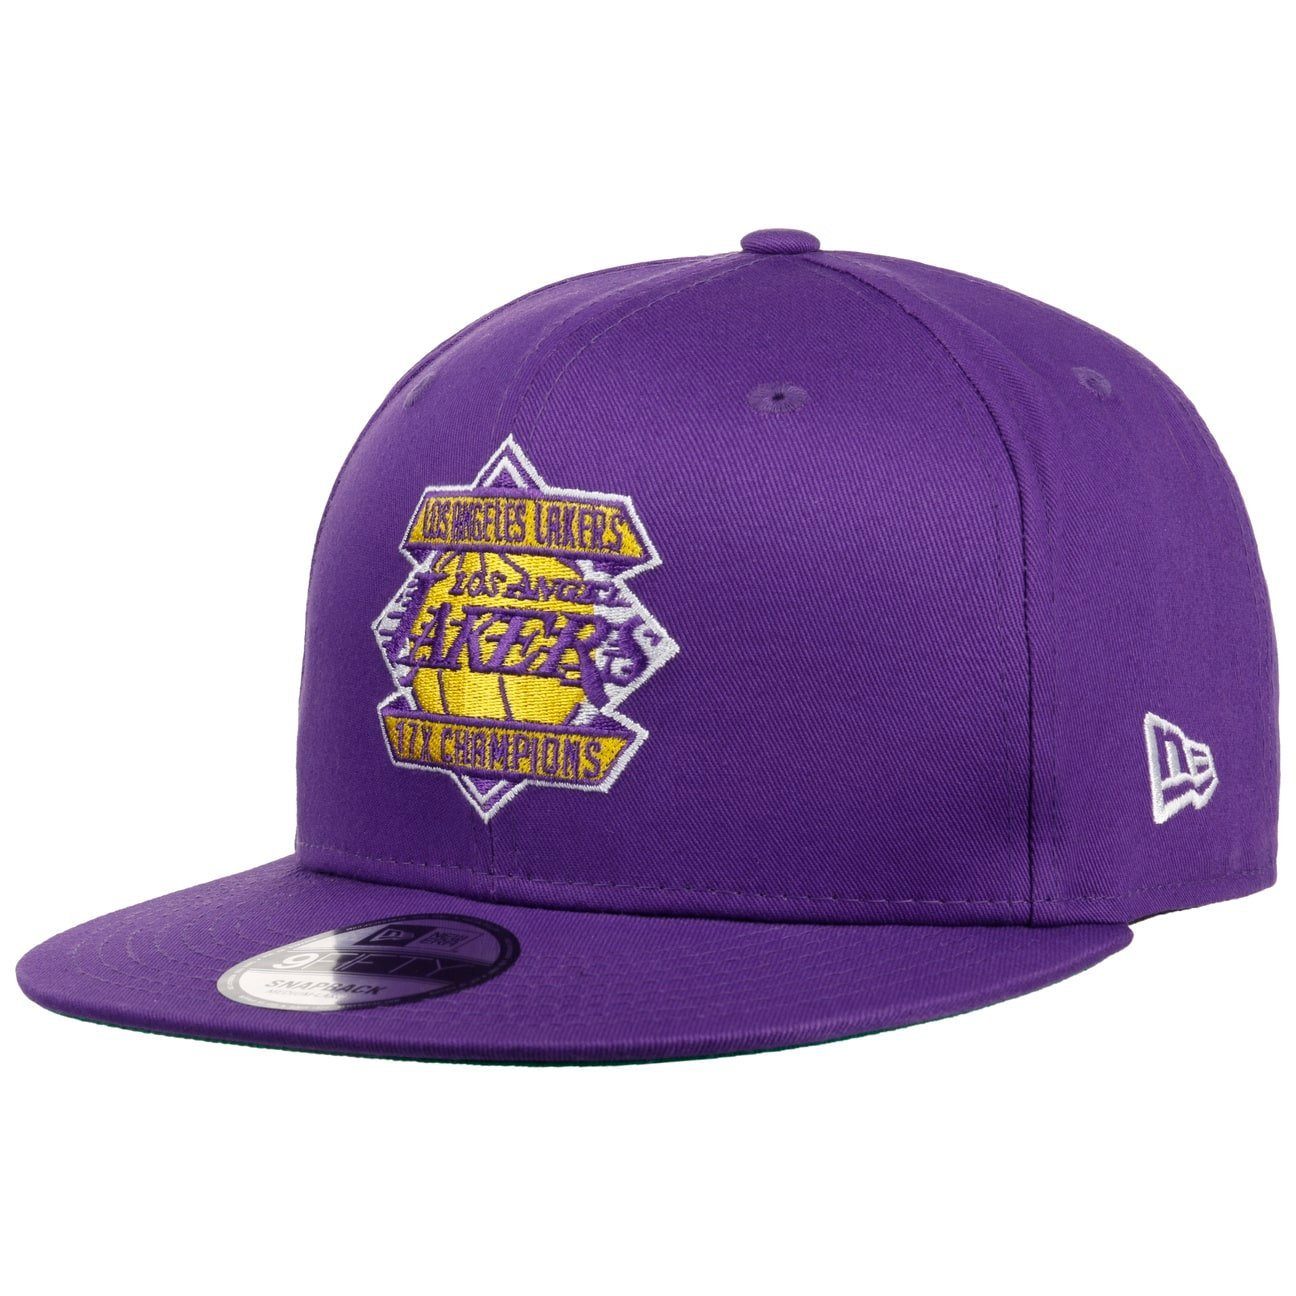 New Basecap Snapback Cap Baseball Era (1-St)